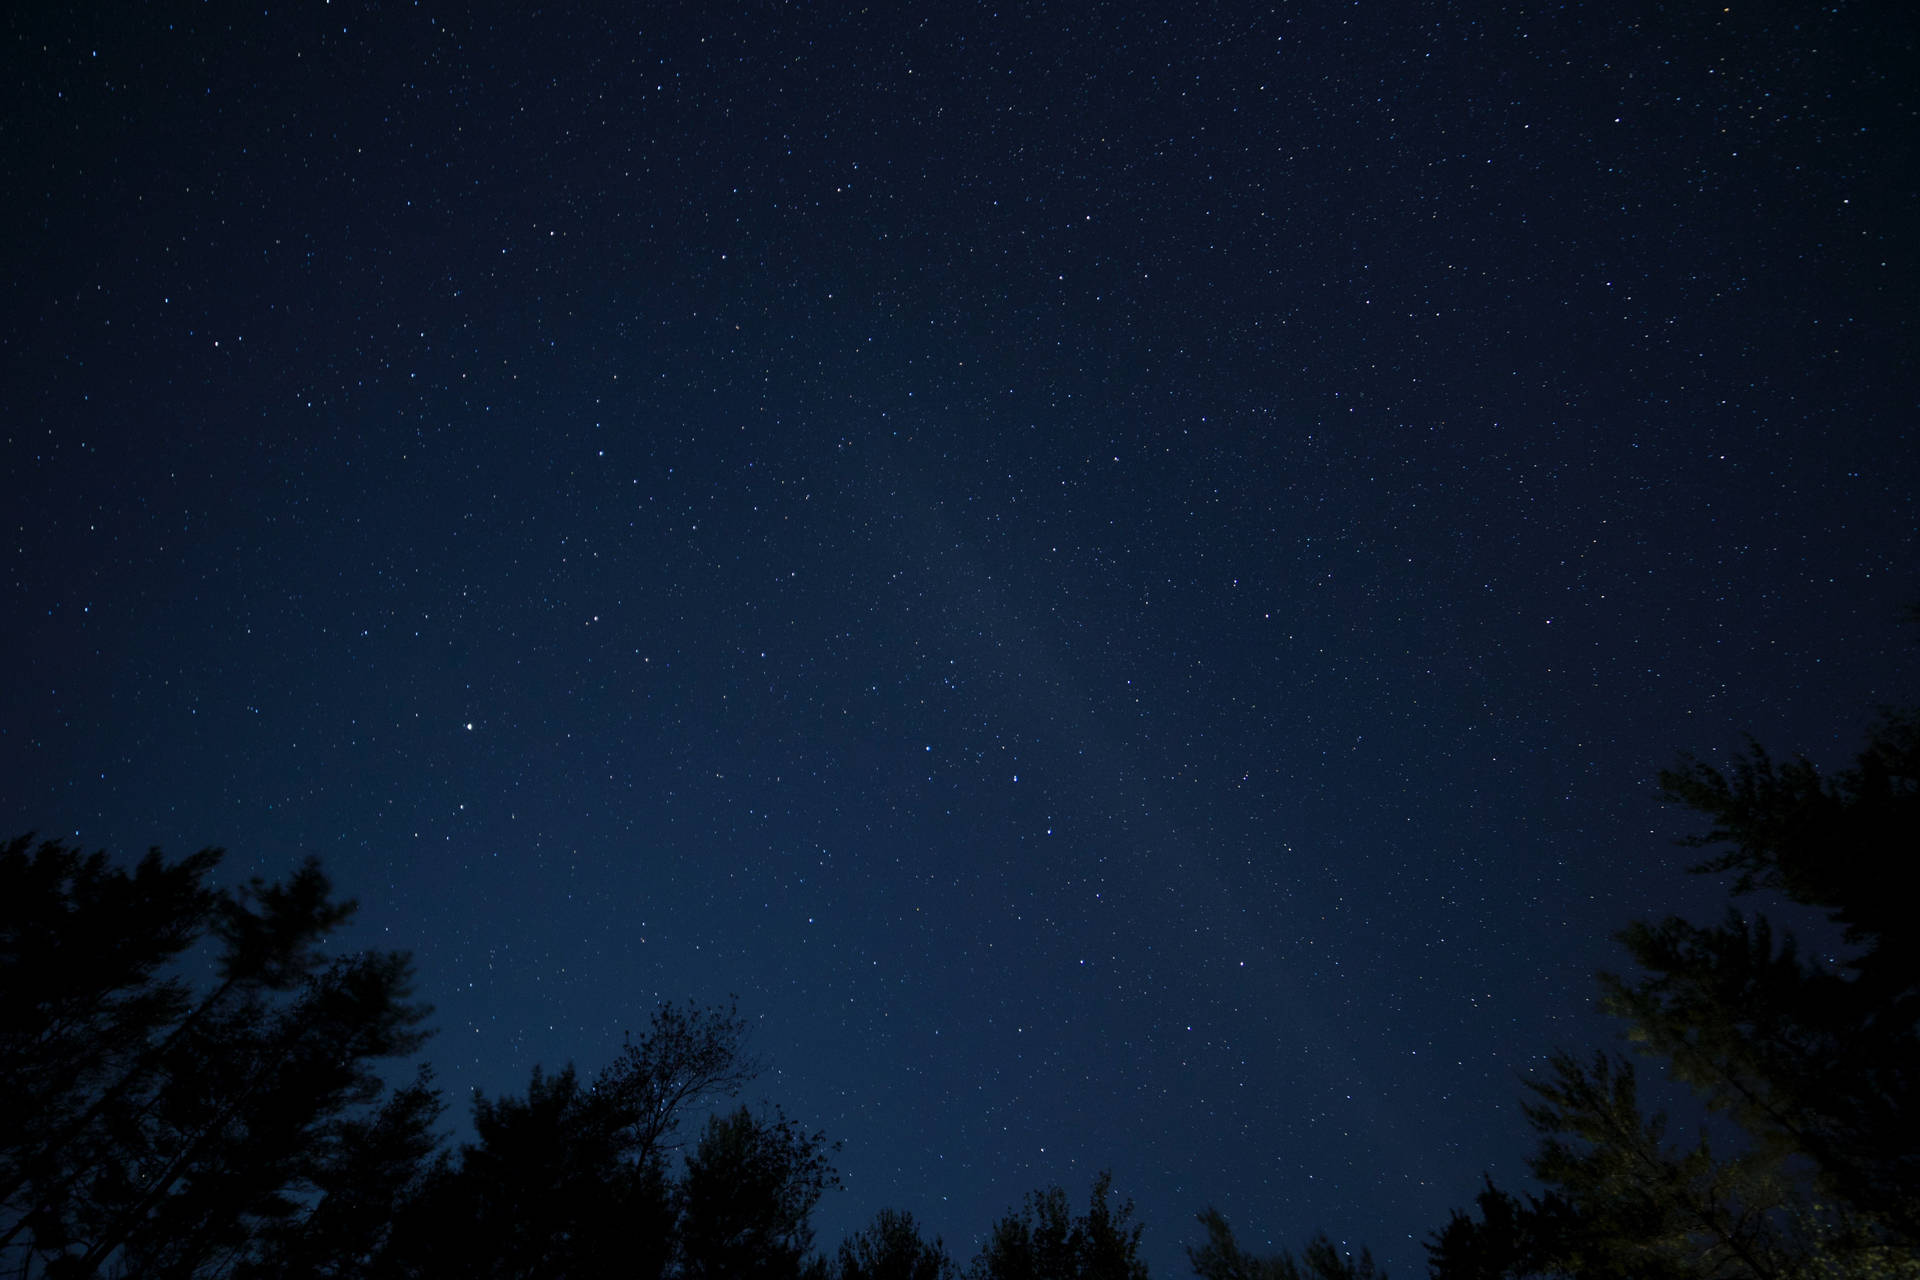 Engaging Night Sky Photo